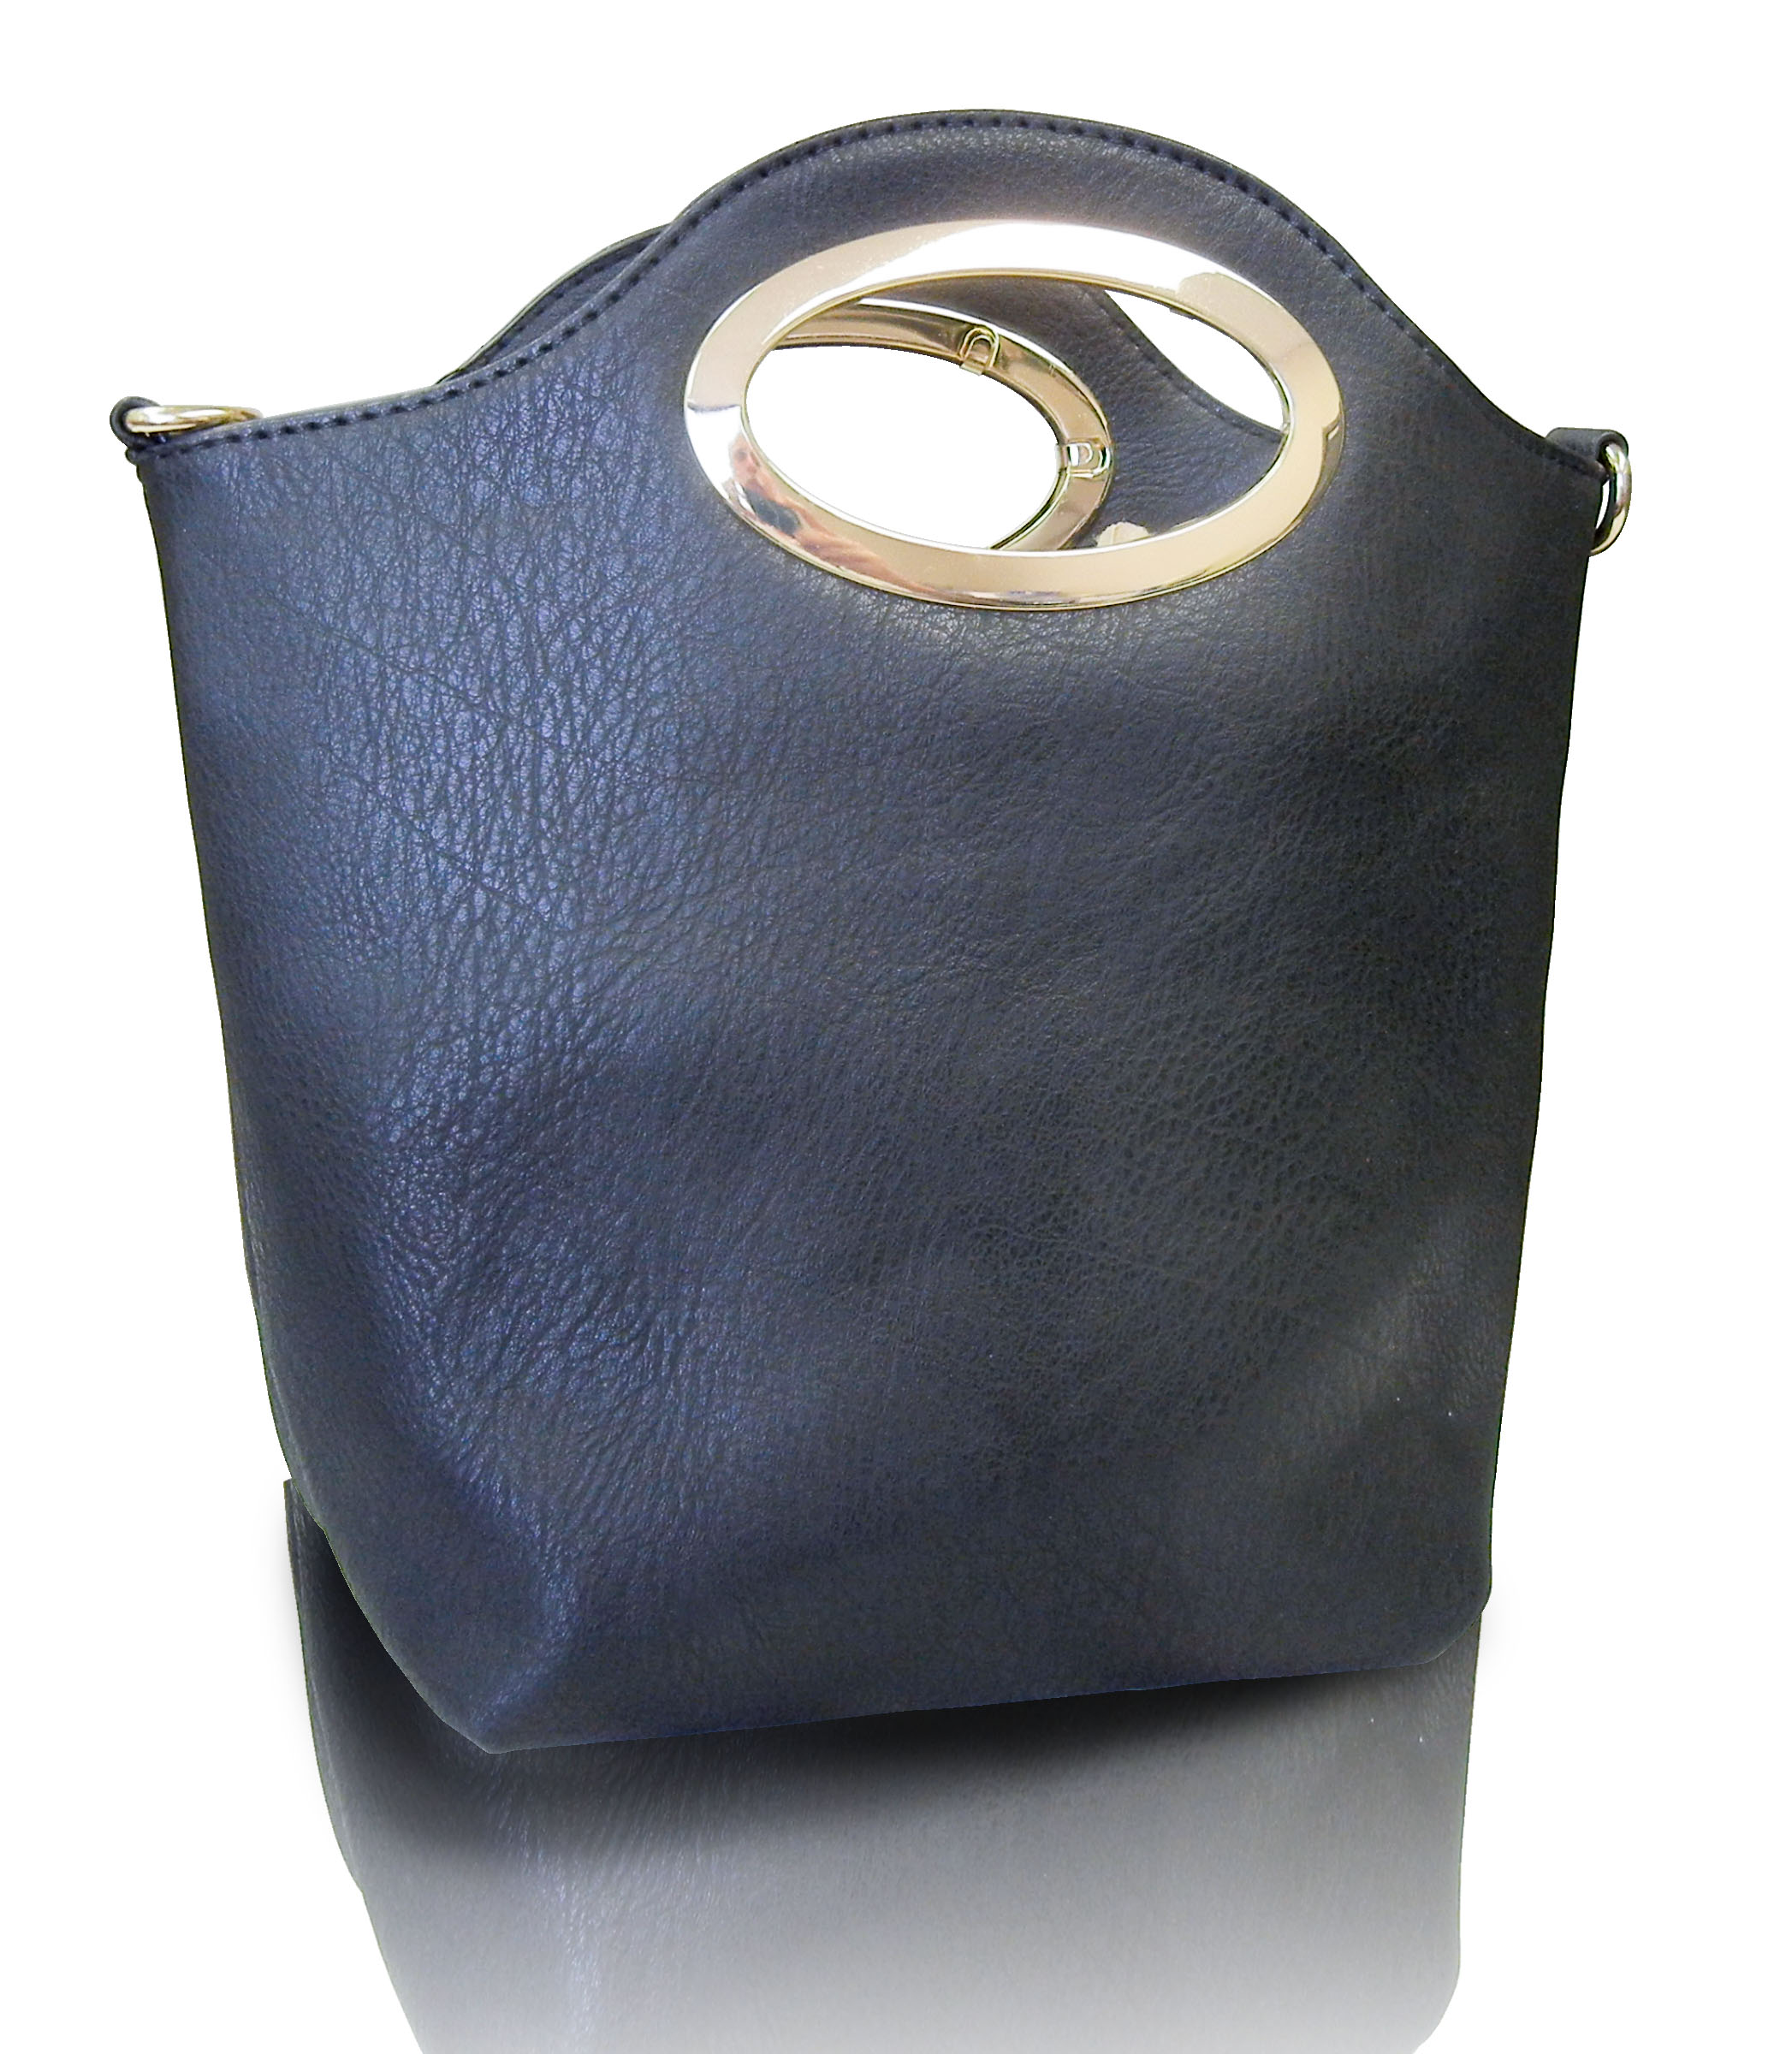 Black color Ladies Handbag with removable straps, satchel bag,with small companion bag,large,